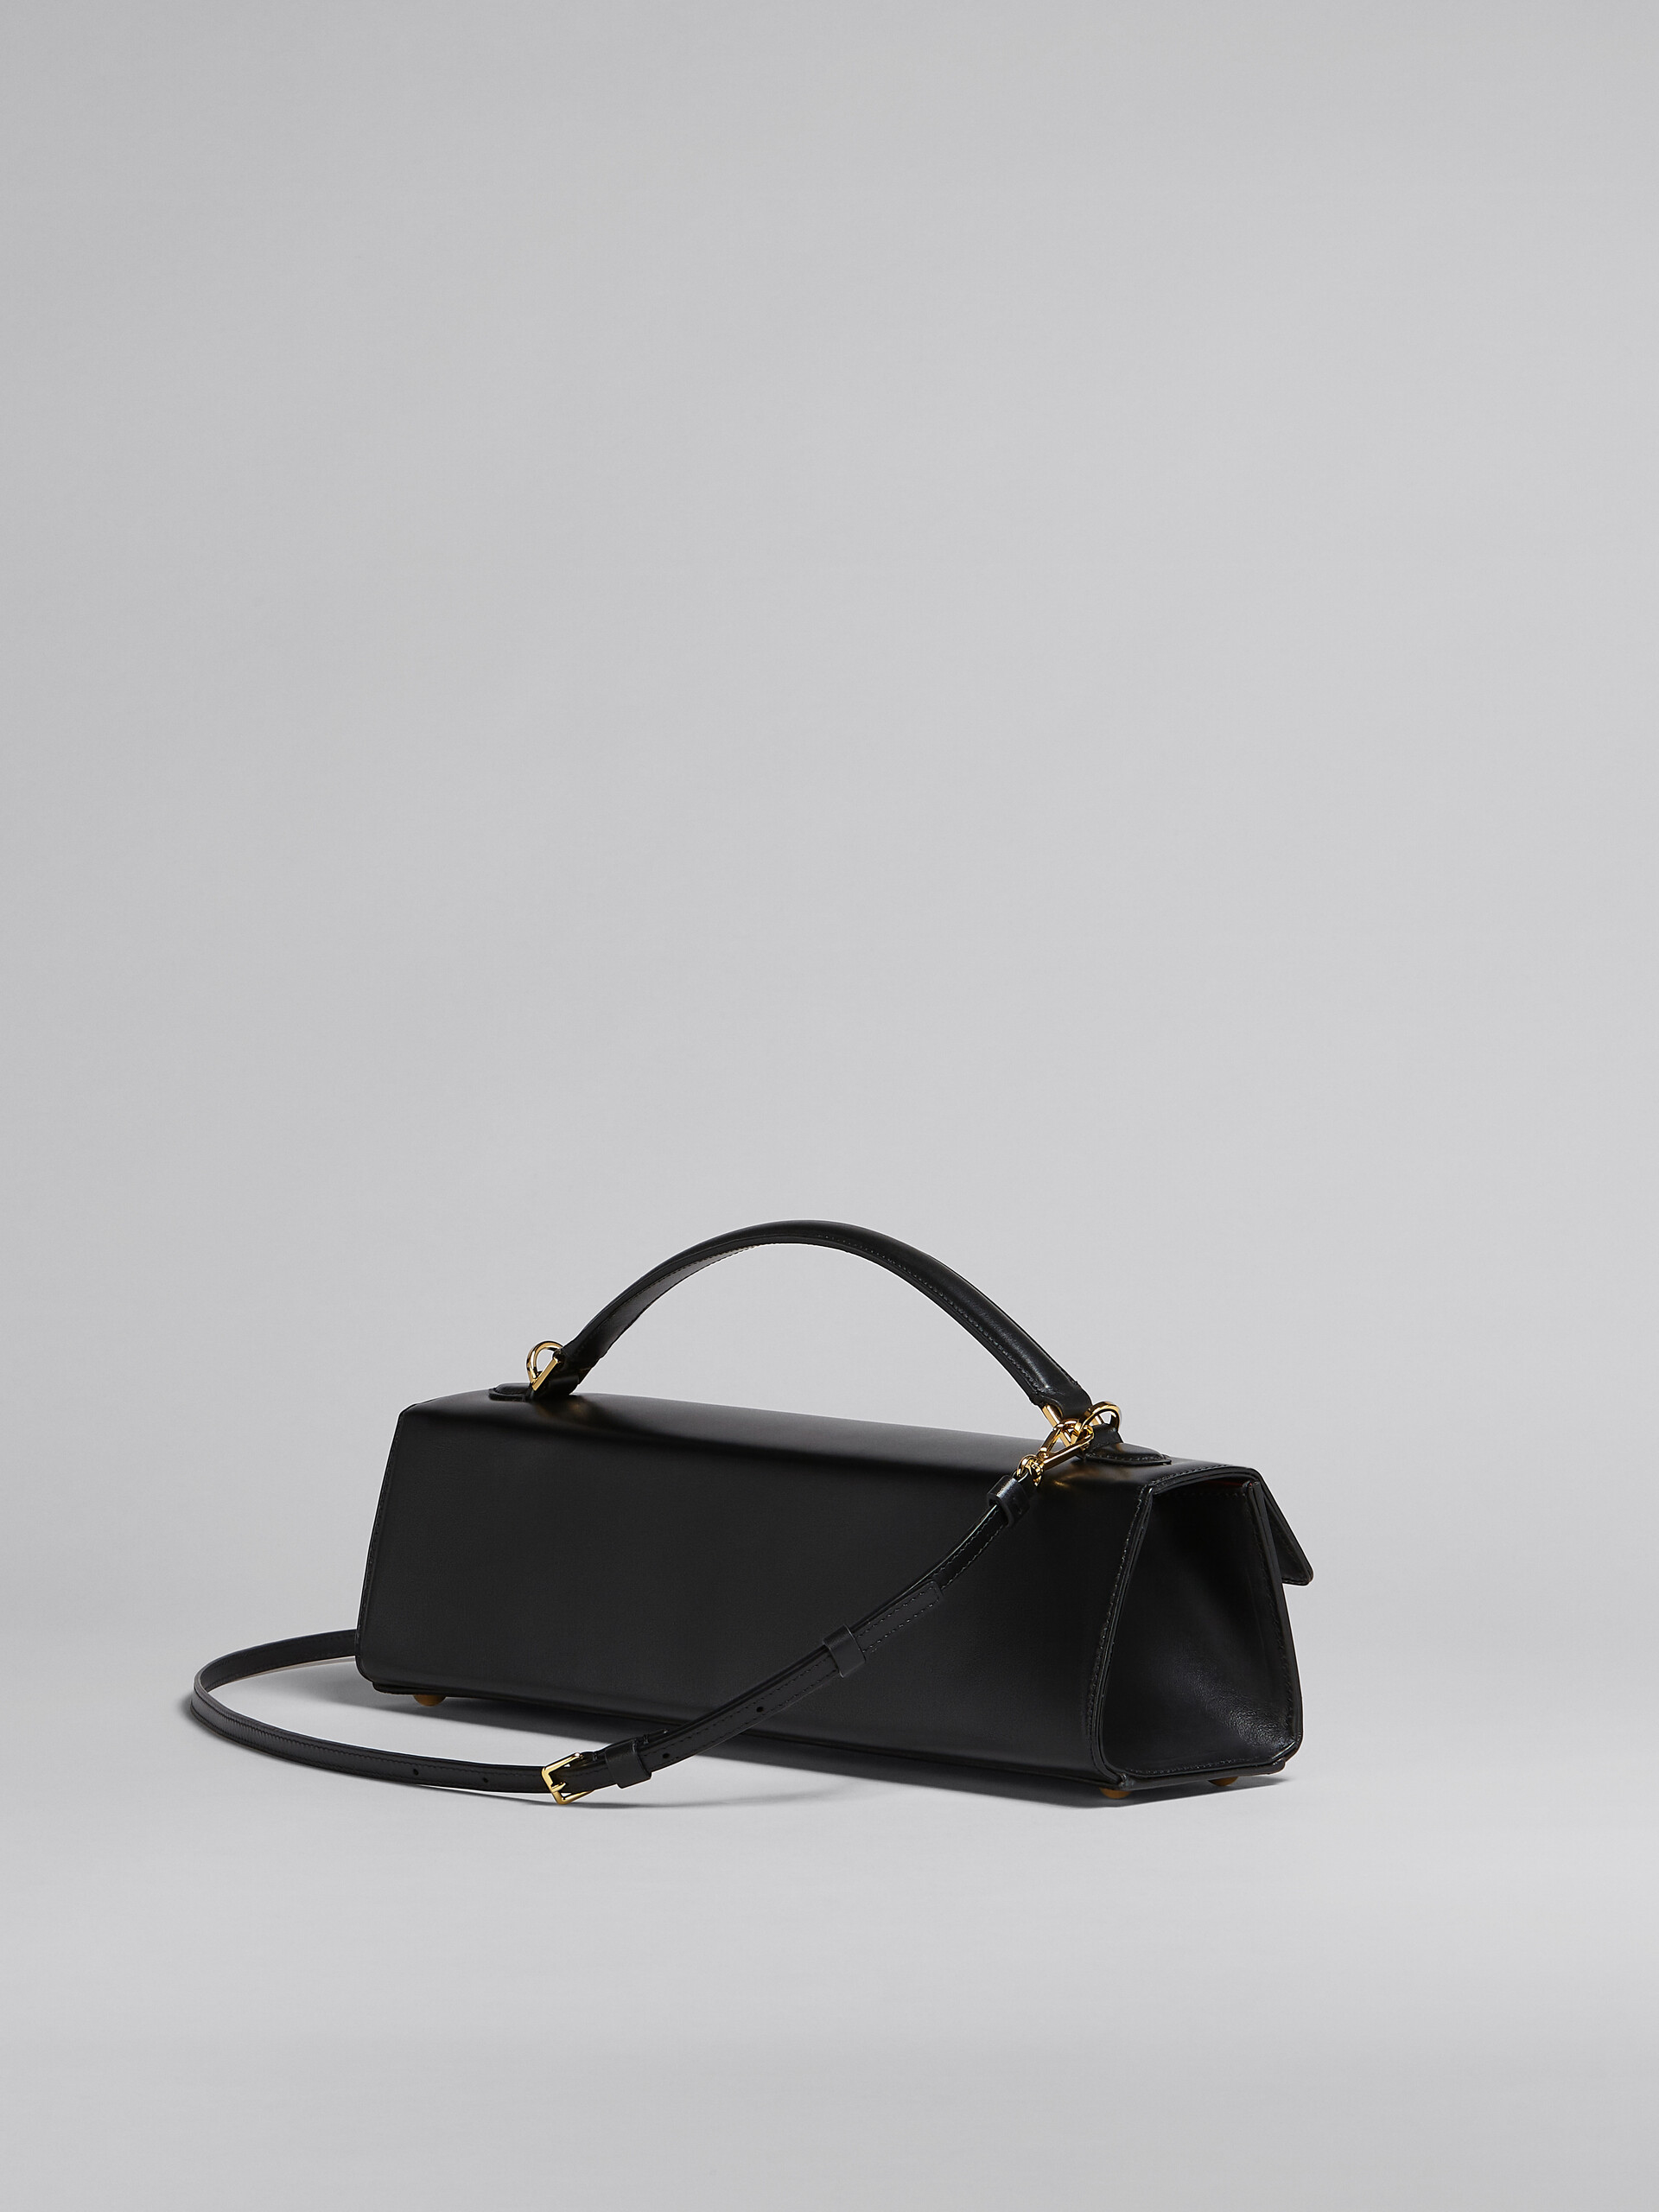 Relativity Large Bag in black leather - Handbag - Image 3